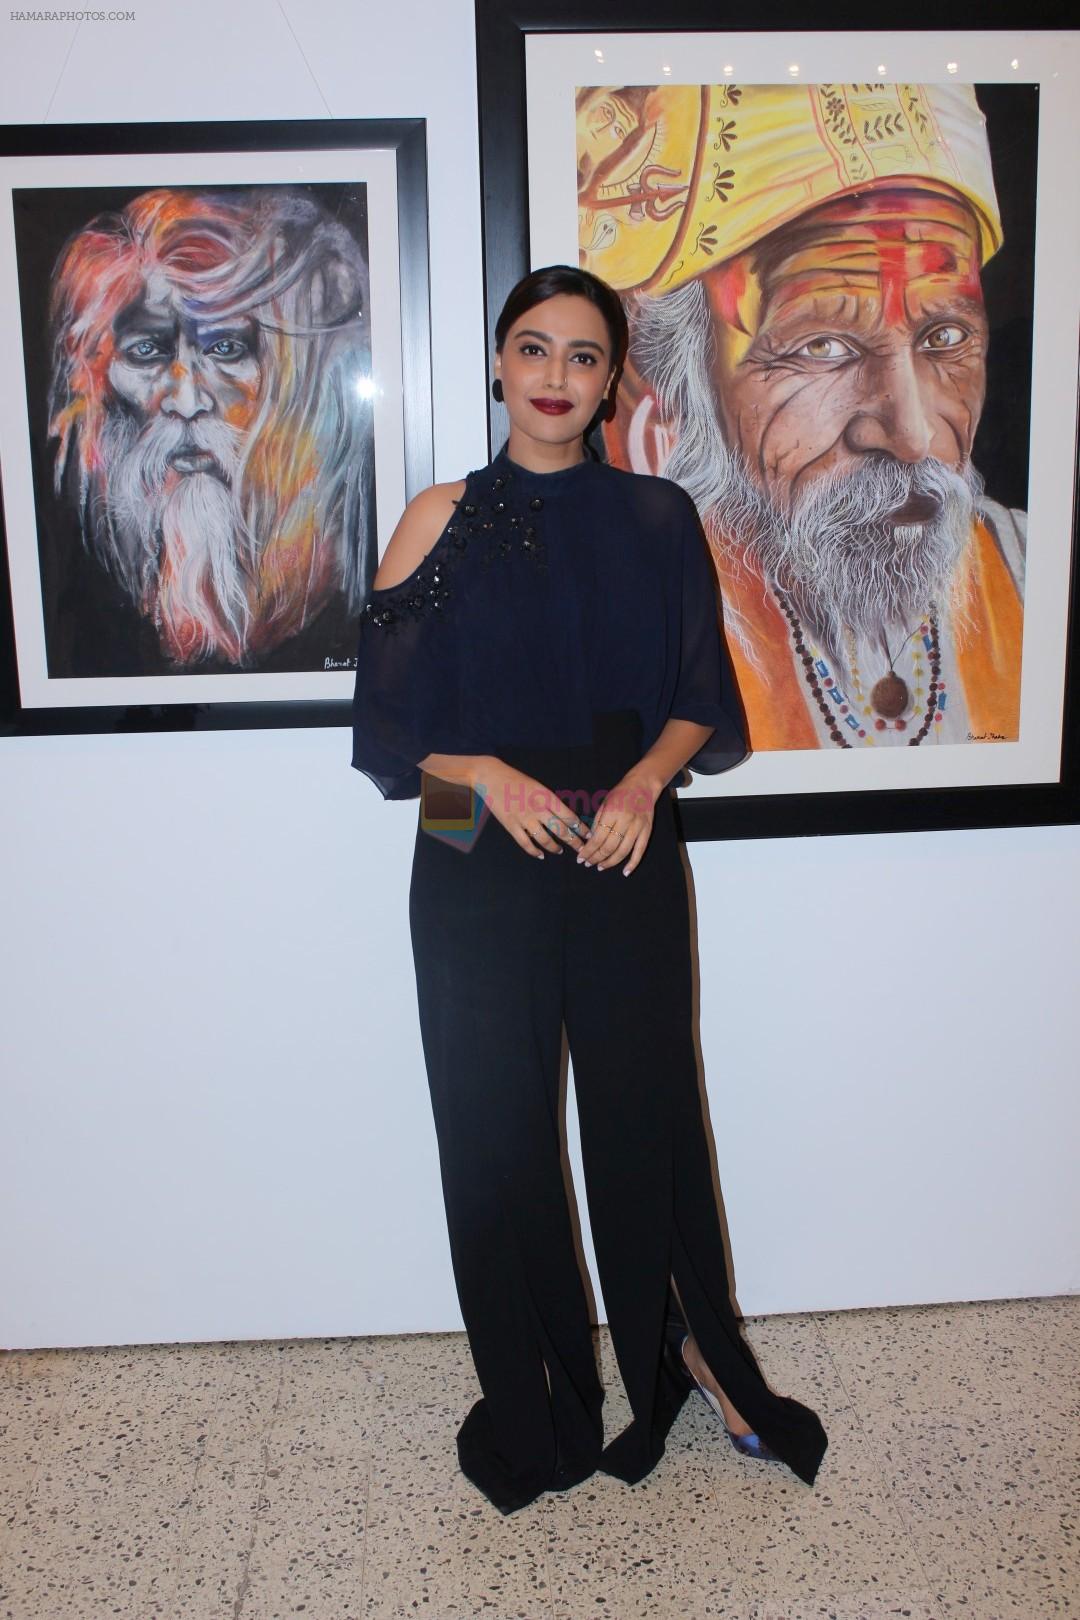 Swara Bhaskar at the Exhibition Of Mr Bharat Thakur Art Gallery on 14th July 2017